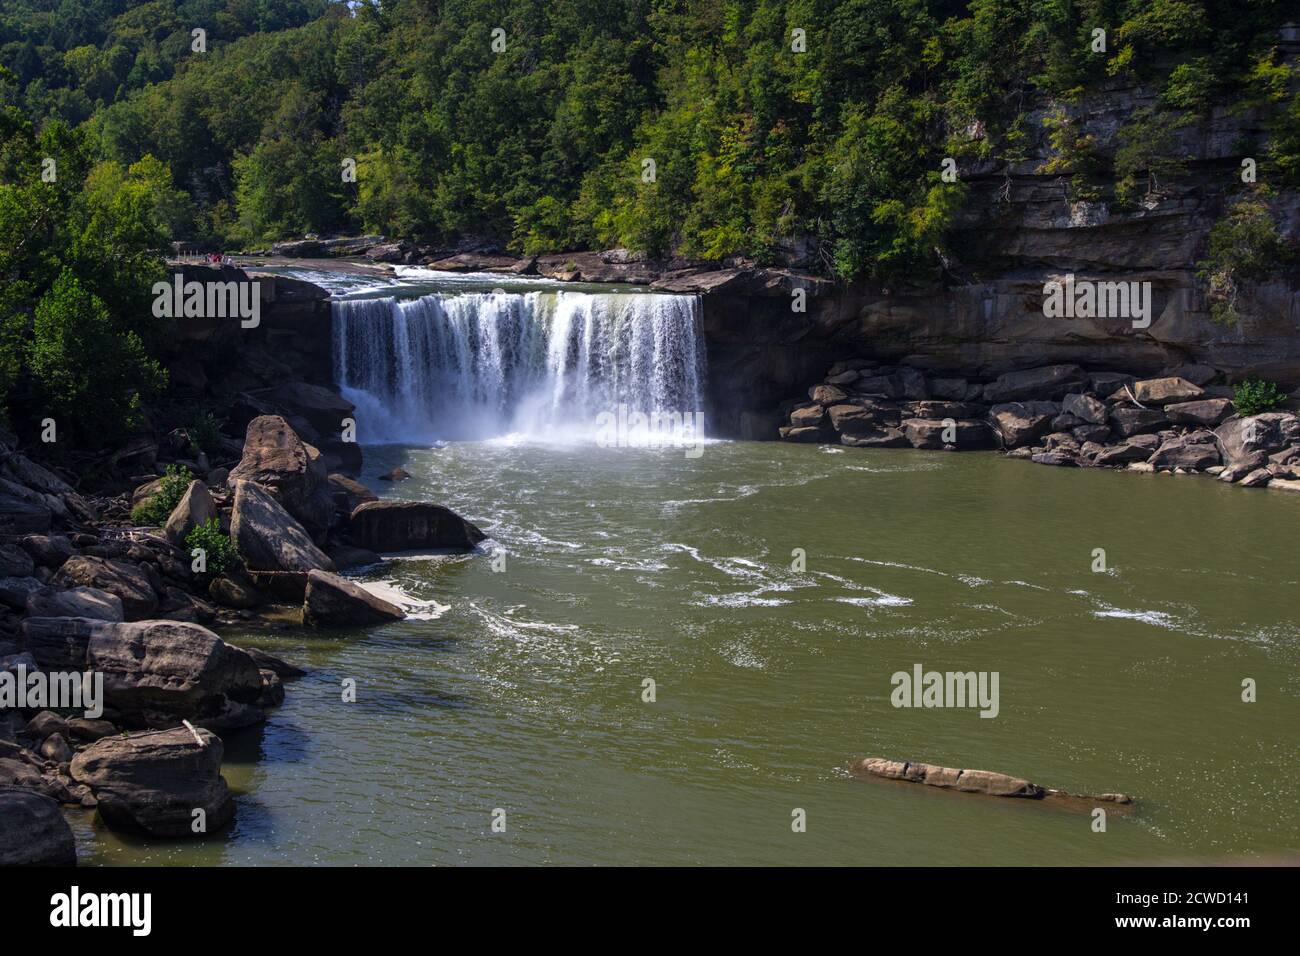 Les magnifiques chutes de Cumberland sont la pièce maîtresse du parc national de Cumberland Falls à Corbin, Kentucky, États-Unis. Banque D'Images